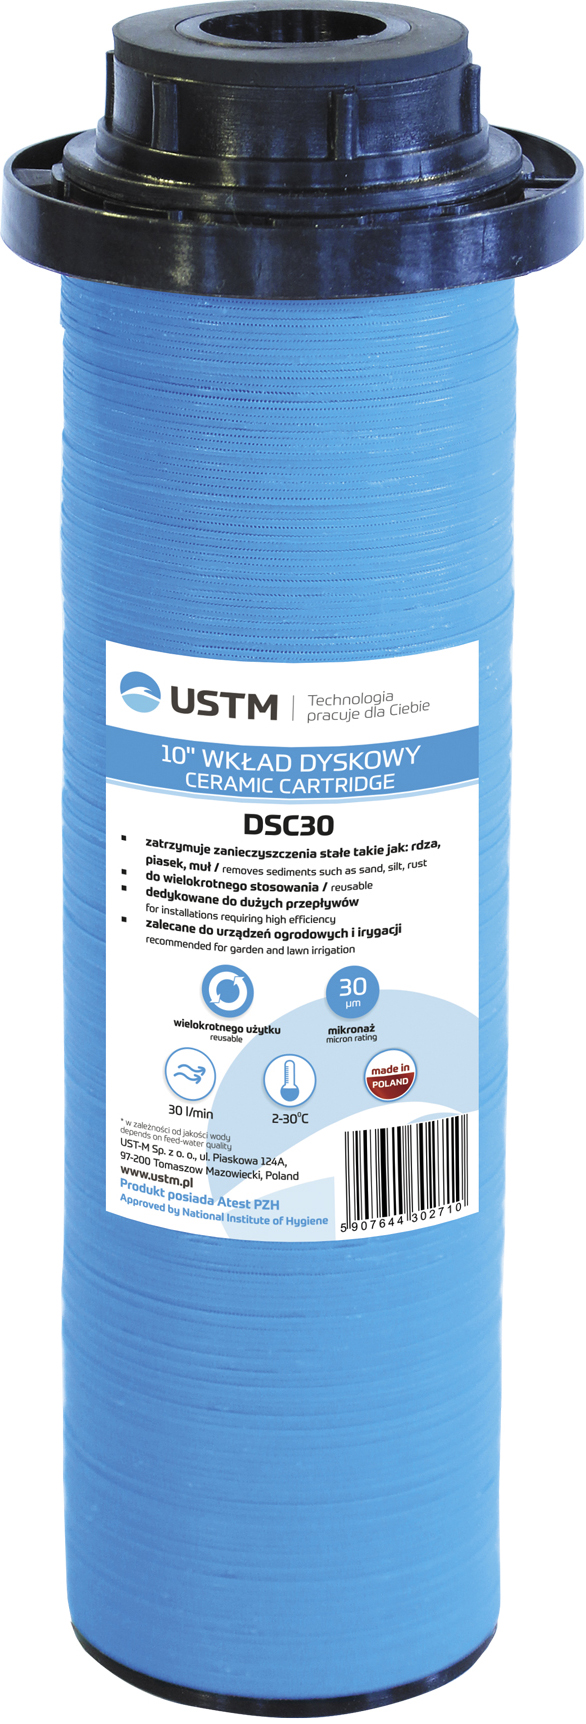 Картридж для фильтра USTM DSC